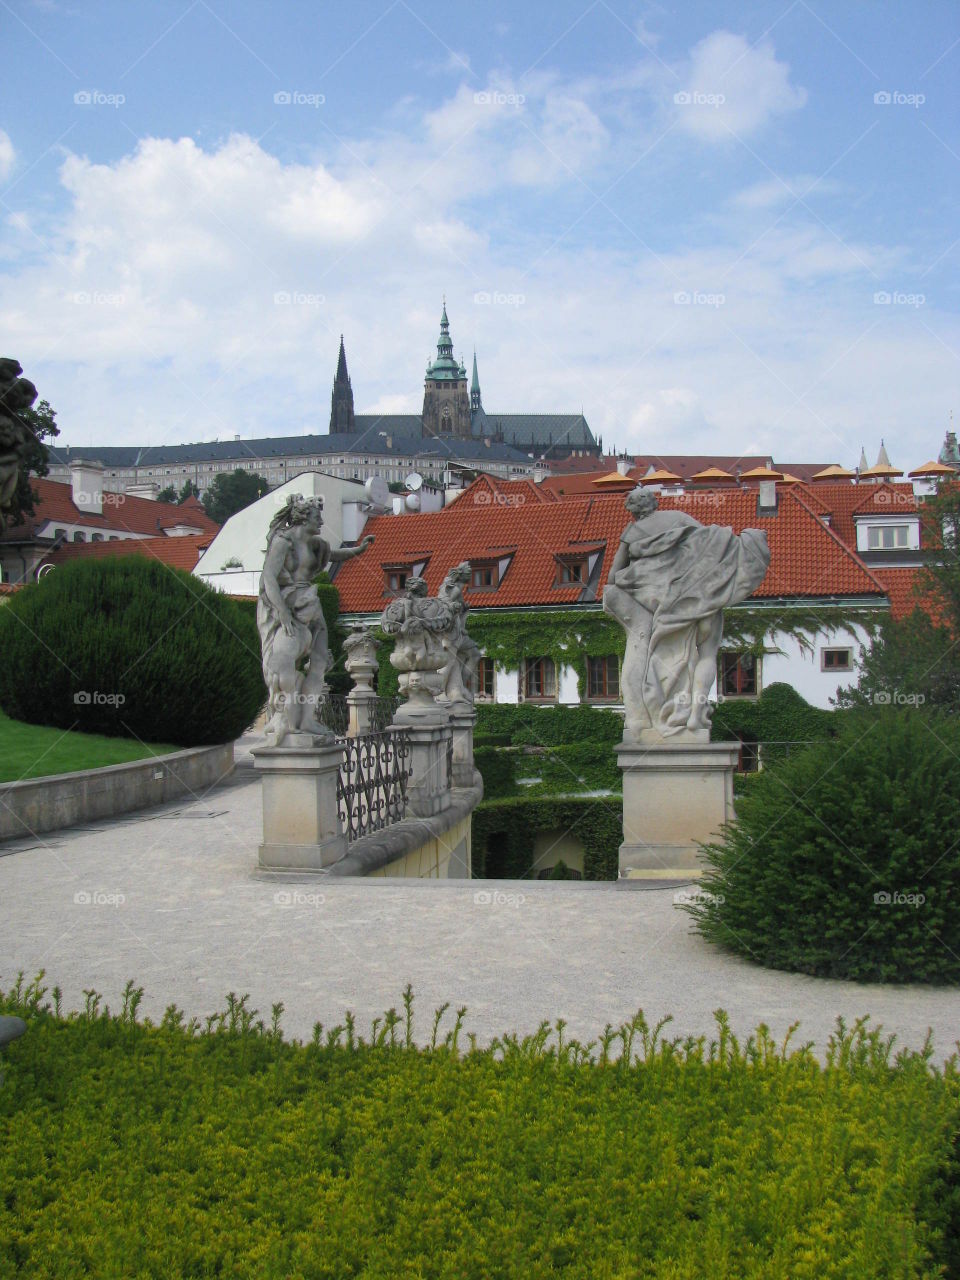 Vrtba Garden with Prague castle